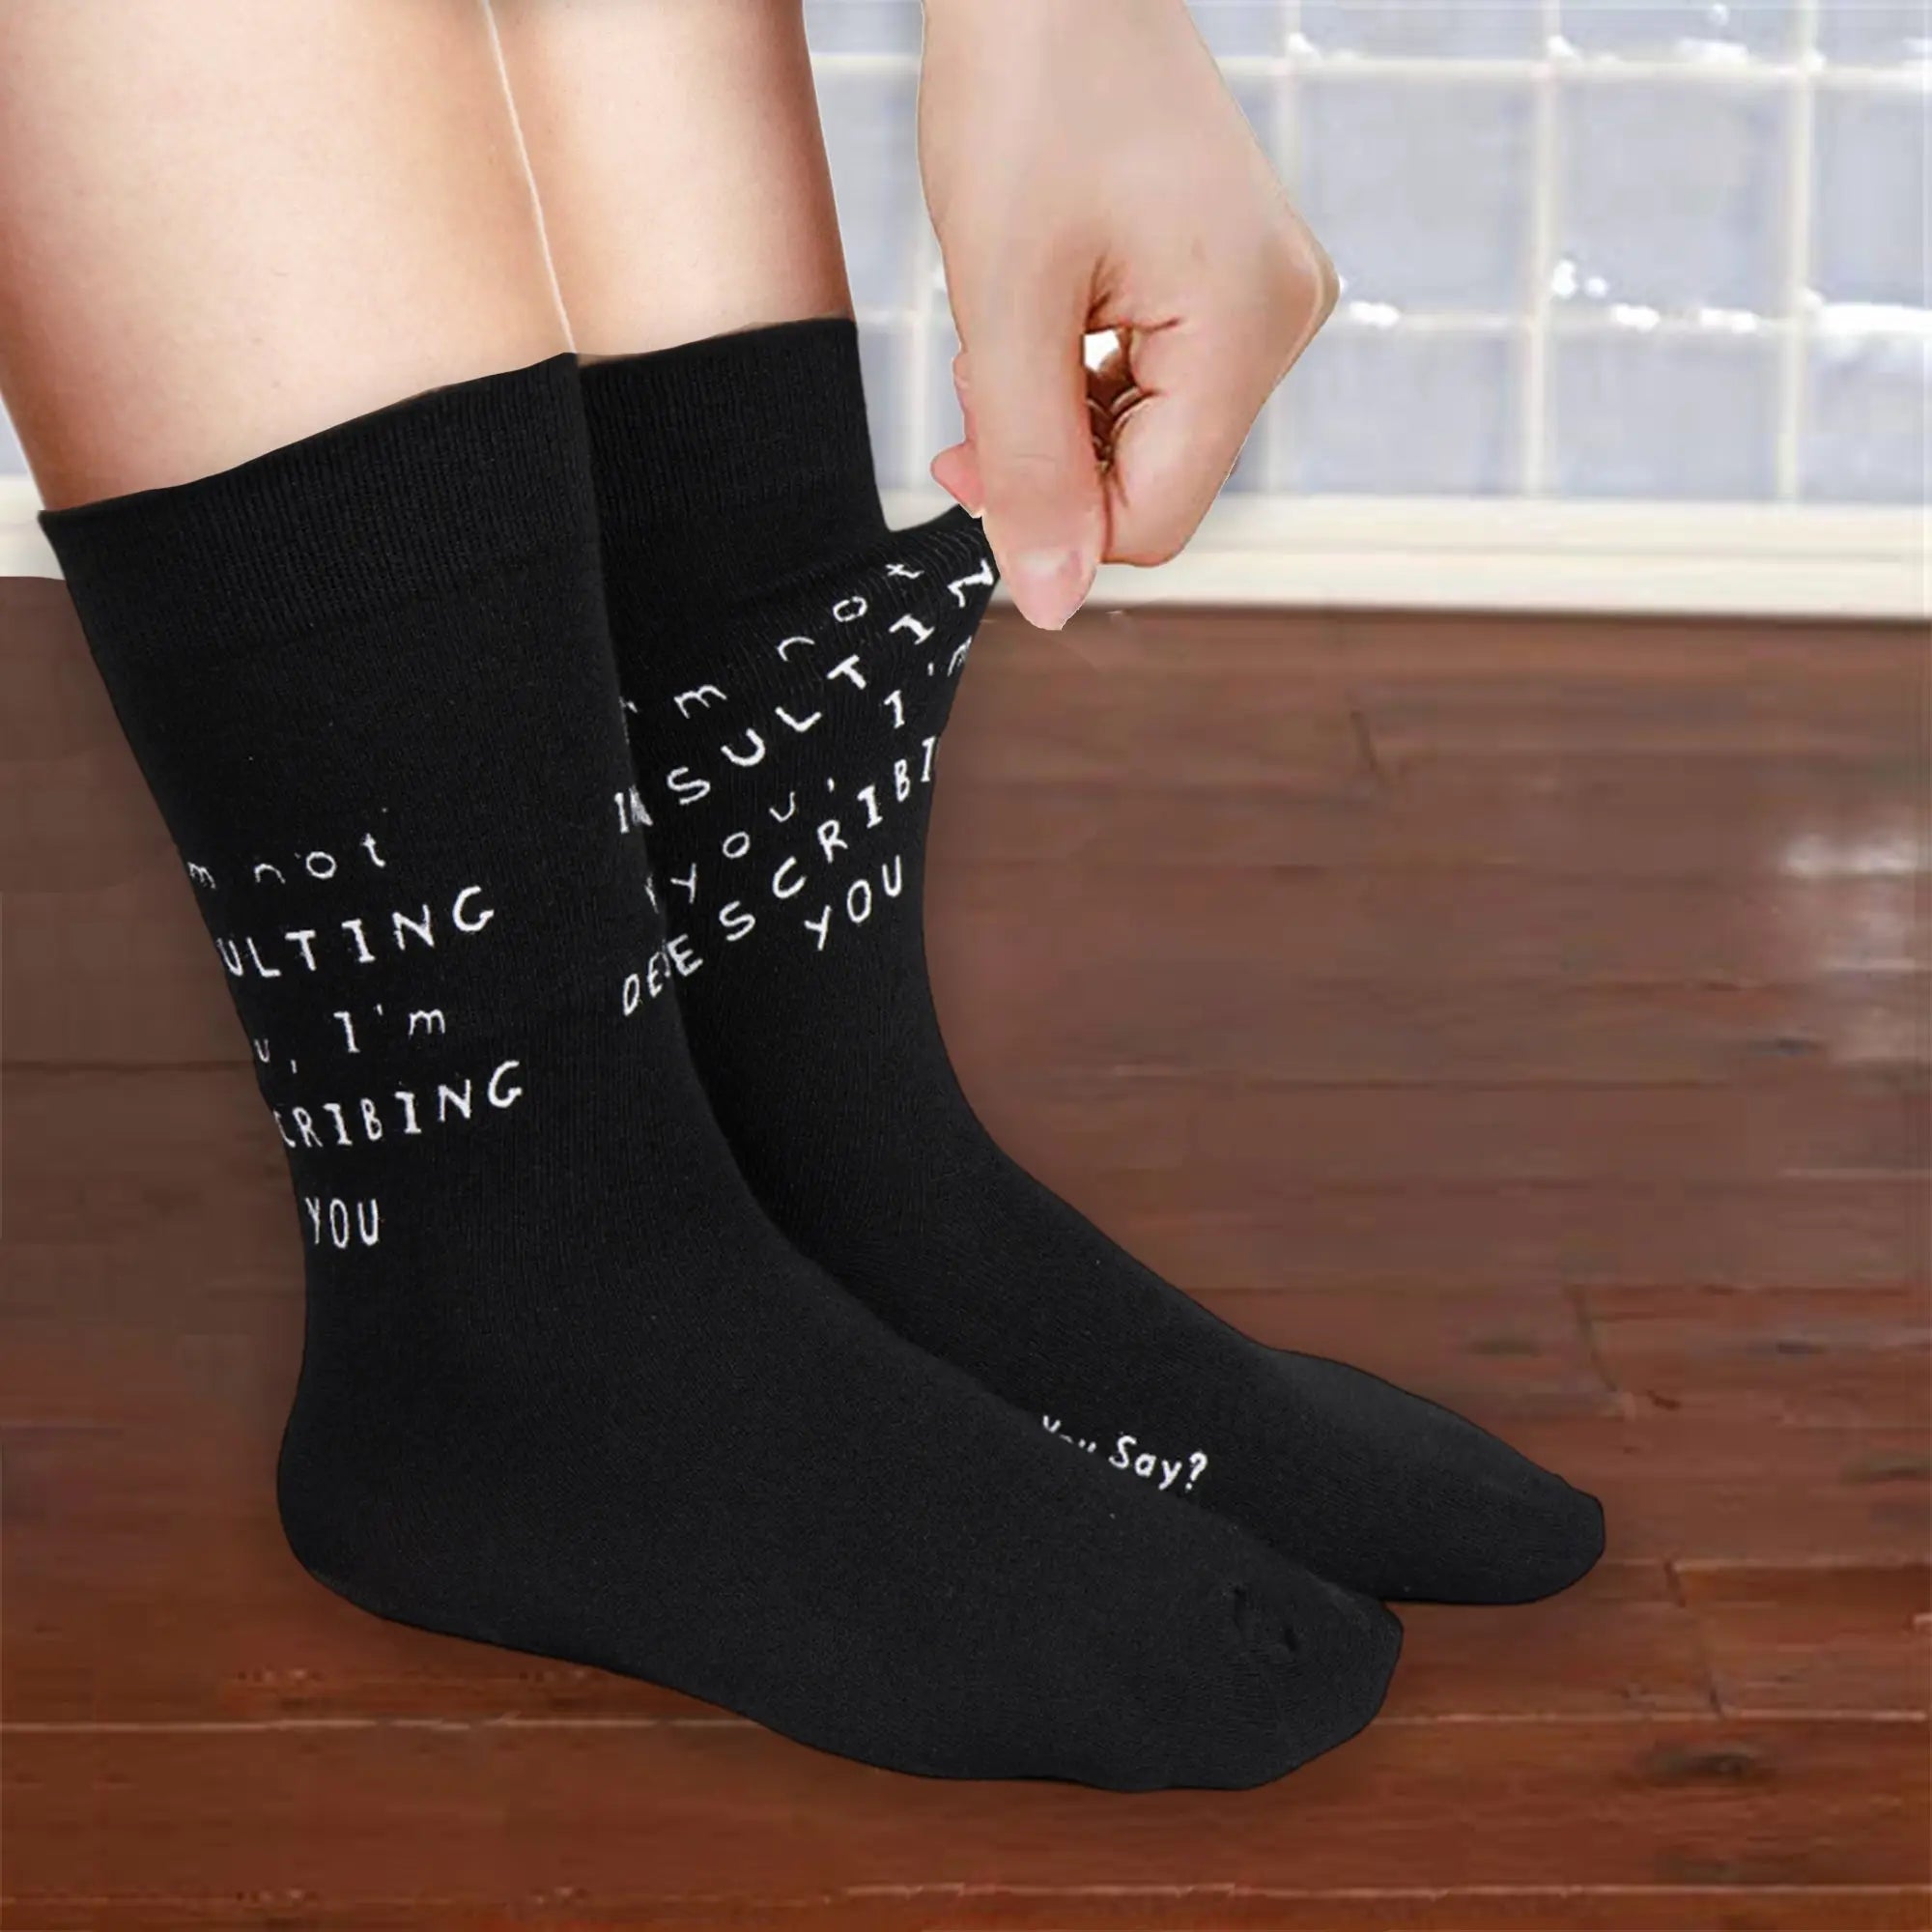 buy crazy socks online